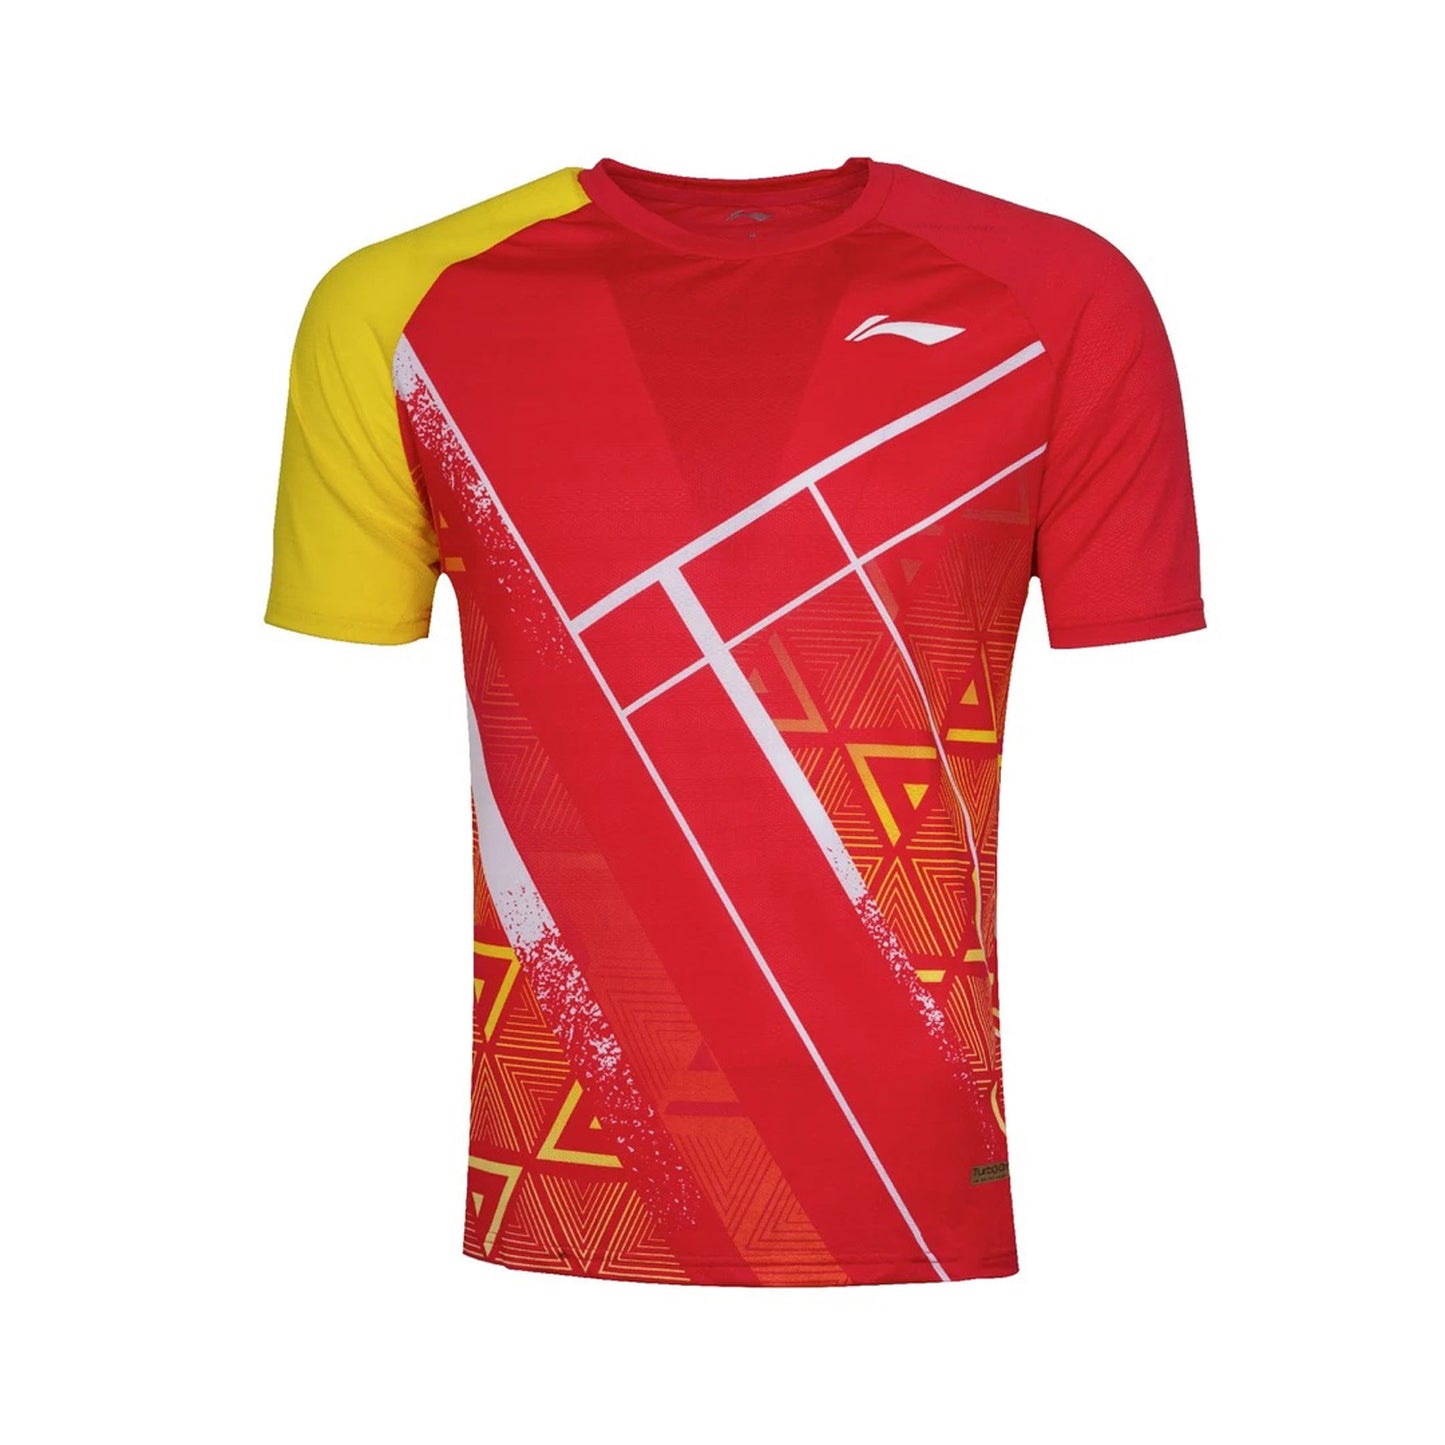 Li-Ning ATSSA01 Round Neck Badminton Tshirt, Red - Best Price online Prokicksports.com